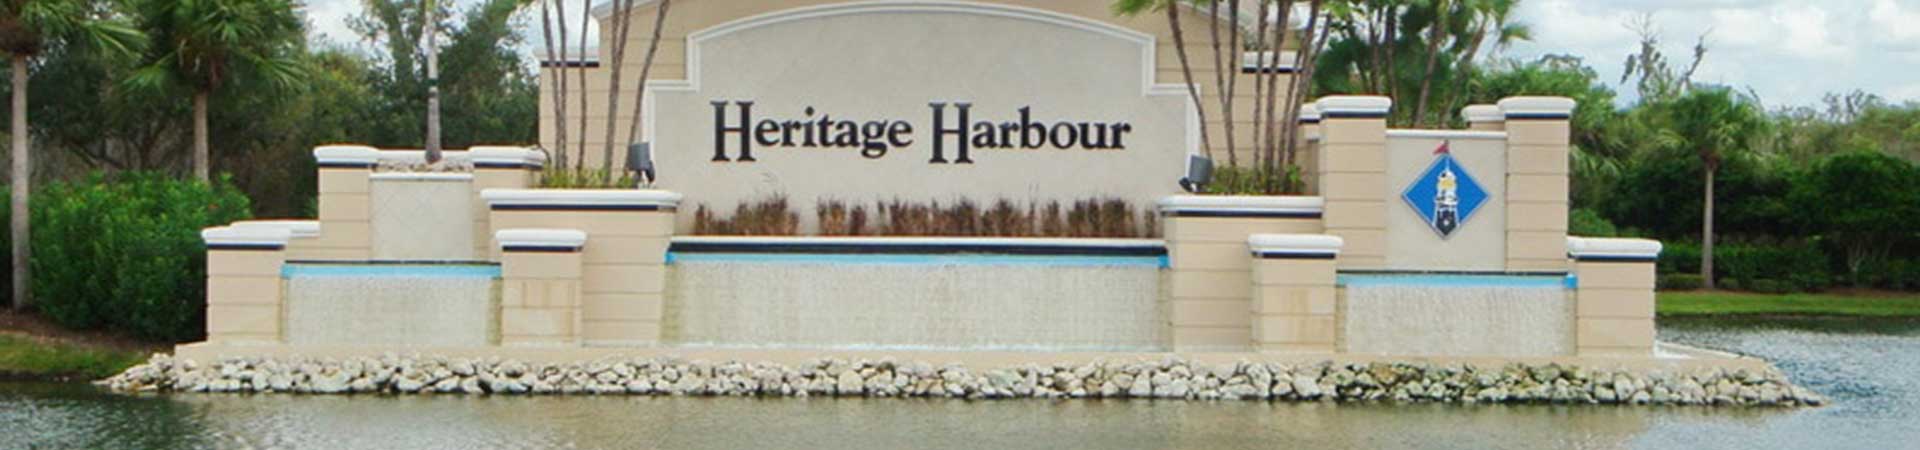 Heritage Harbour Market Place